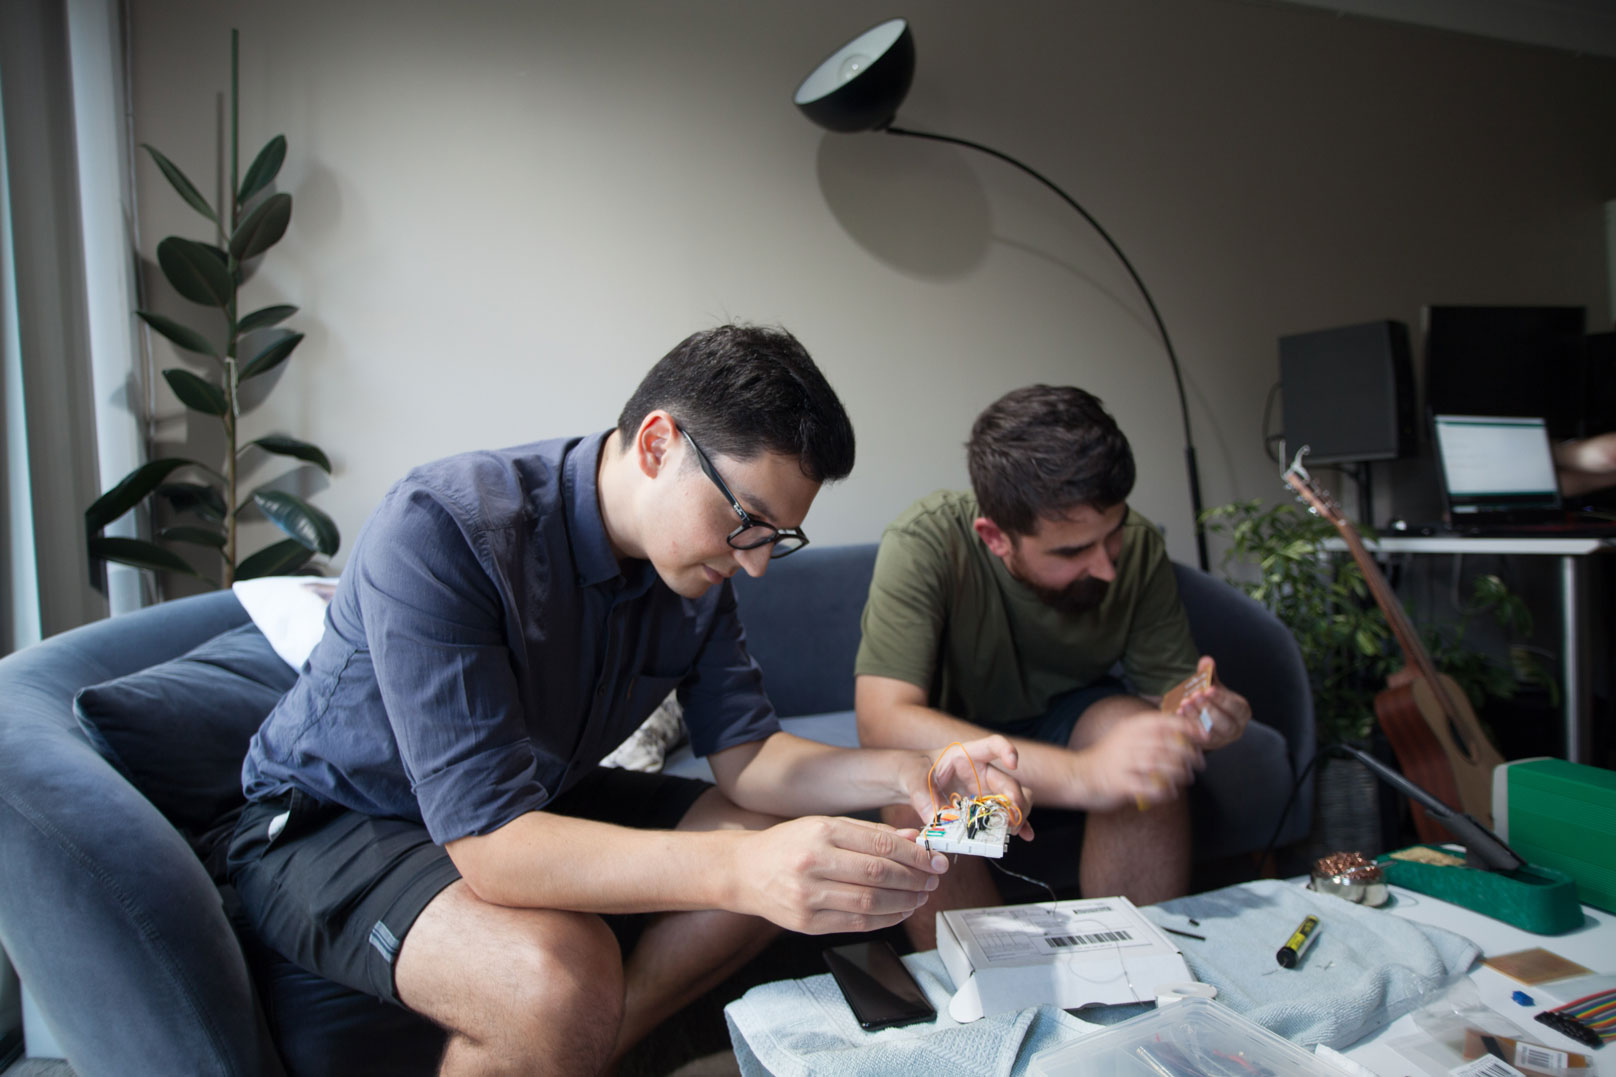 Levi Patel and Chris Pratt working on robotics circuits